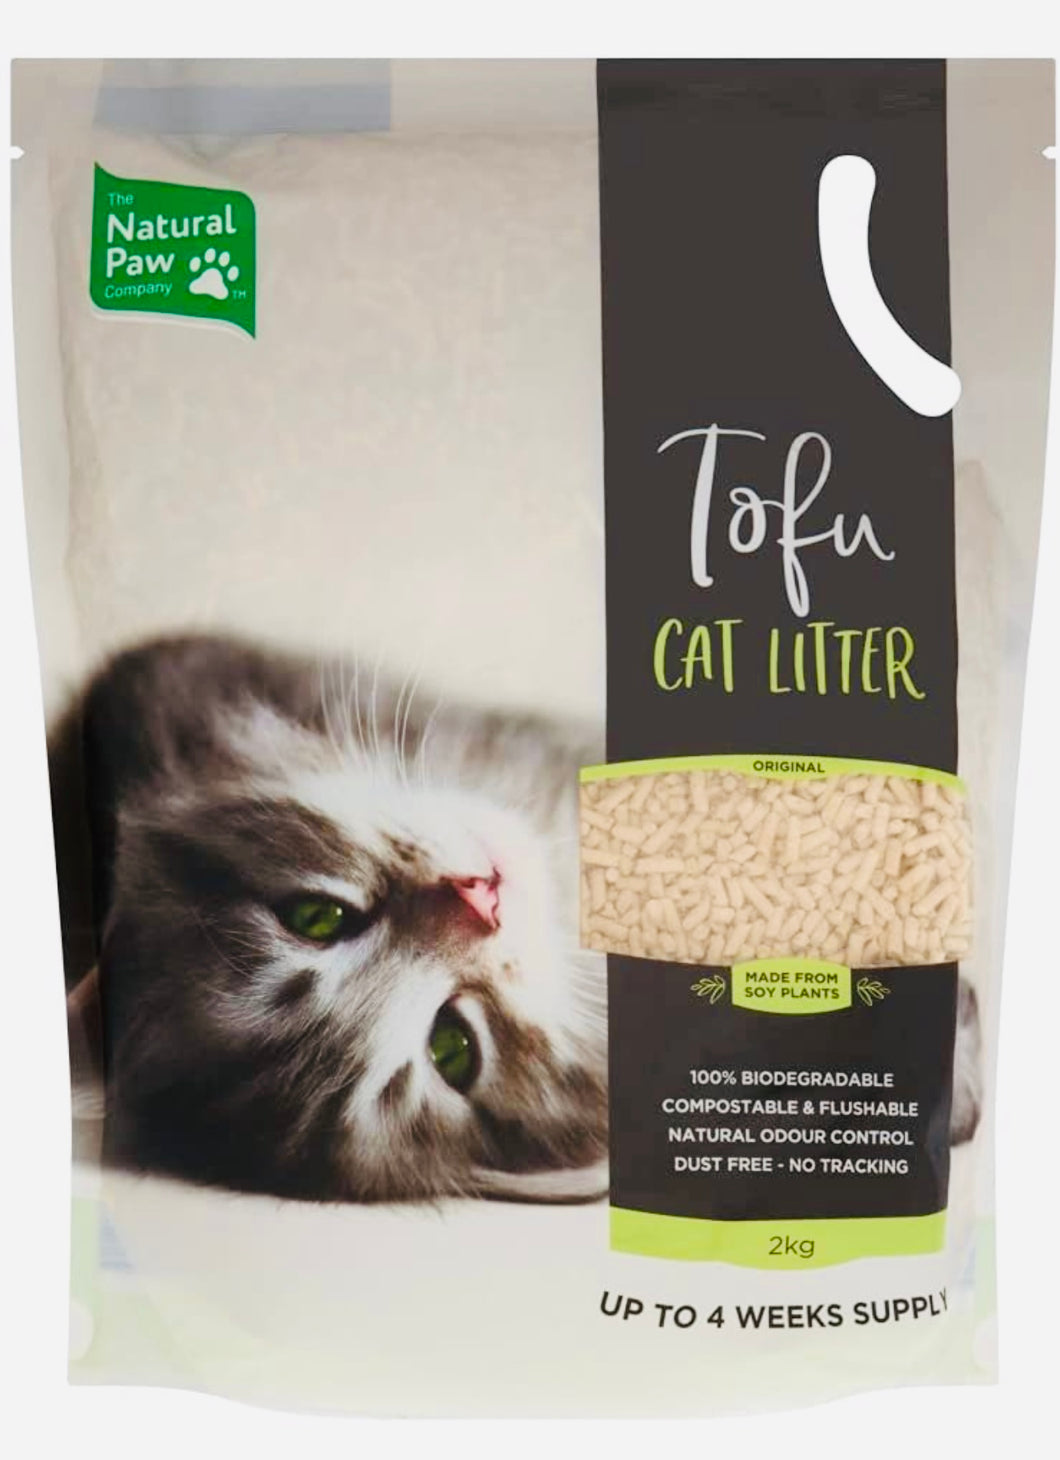 Tofu Cat Litter Natural Paw company 2kg